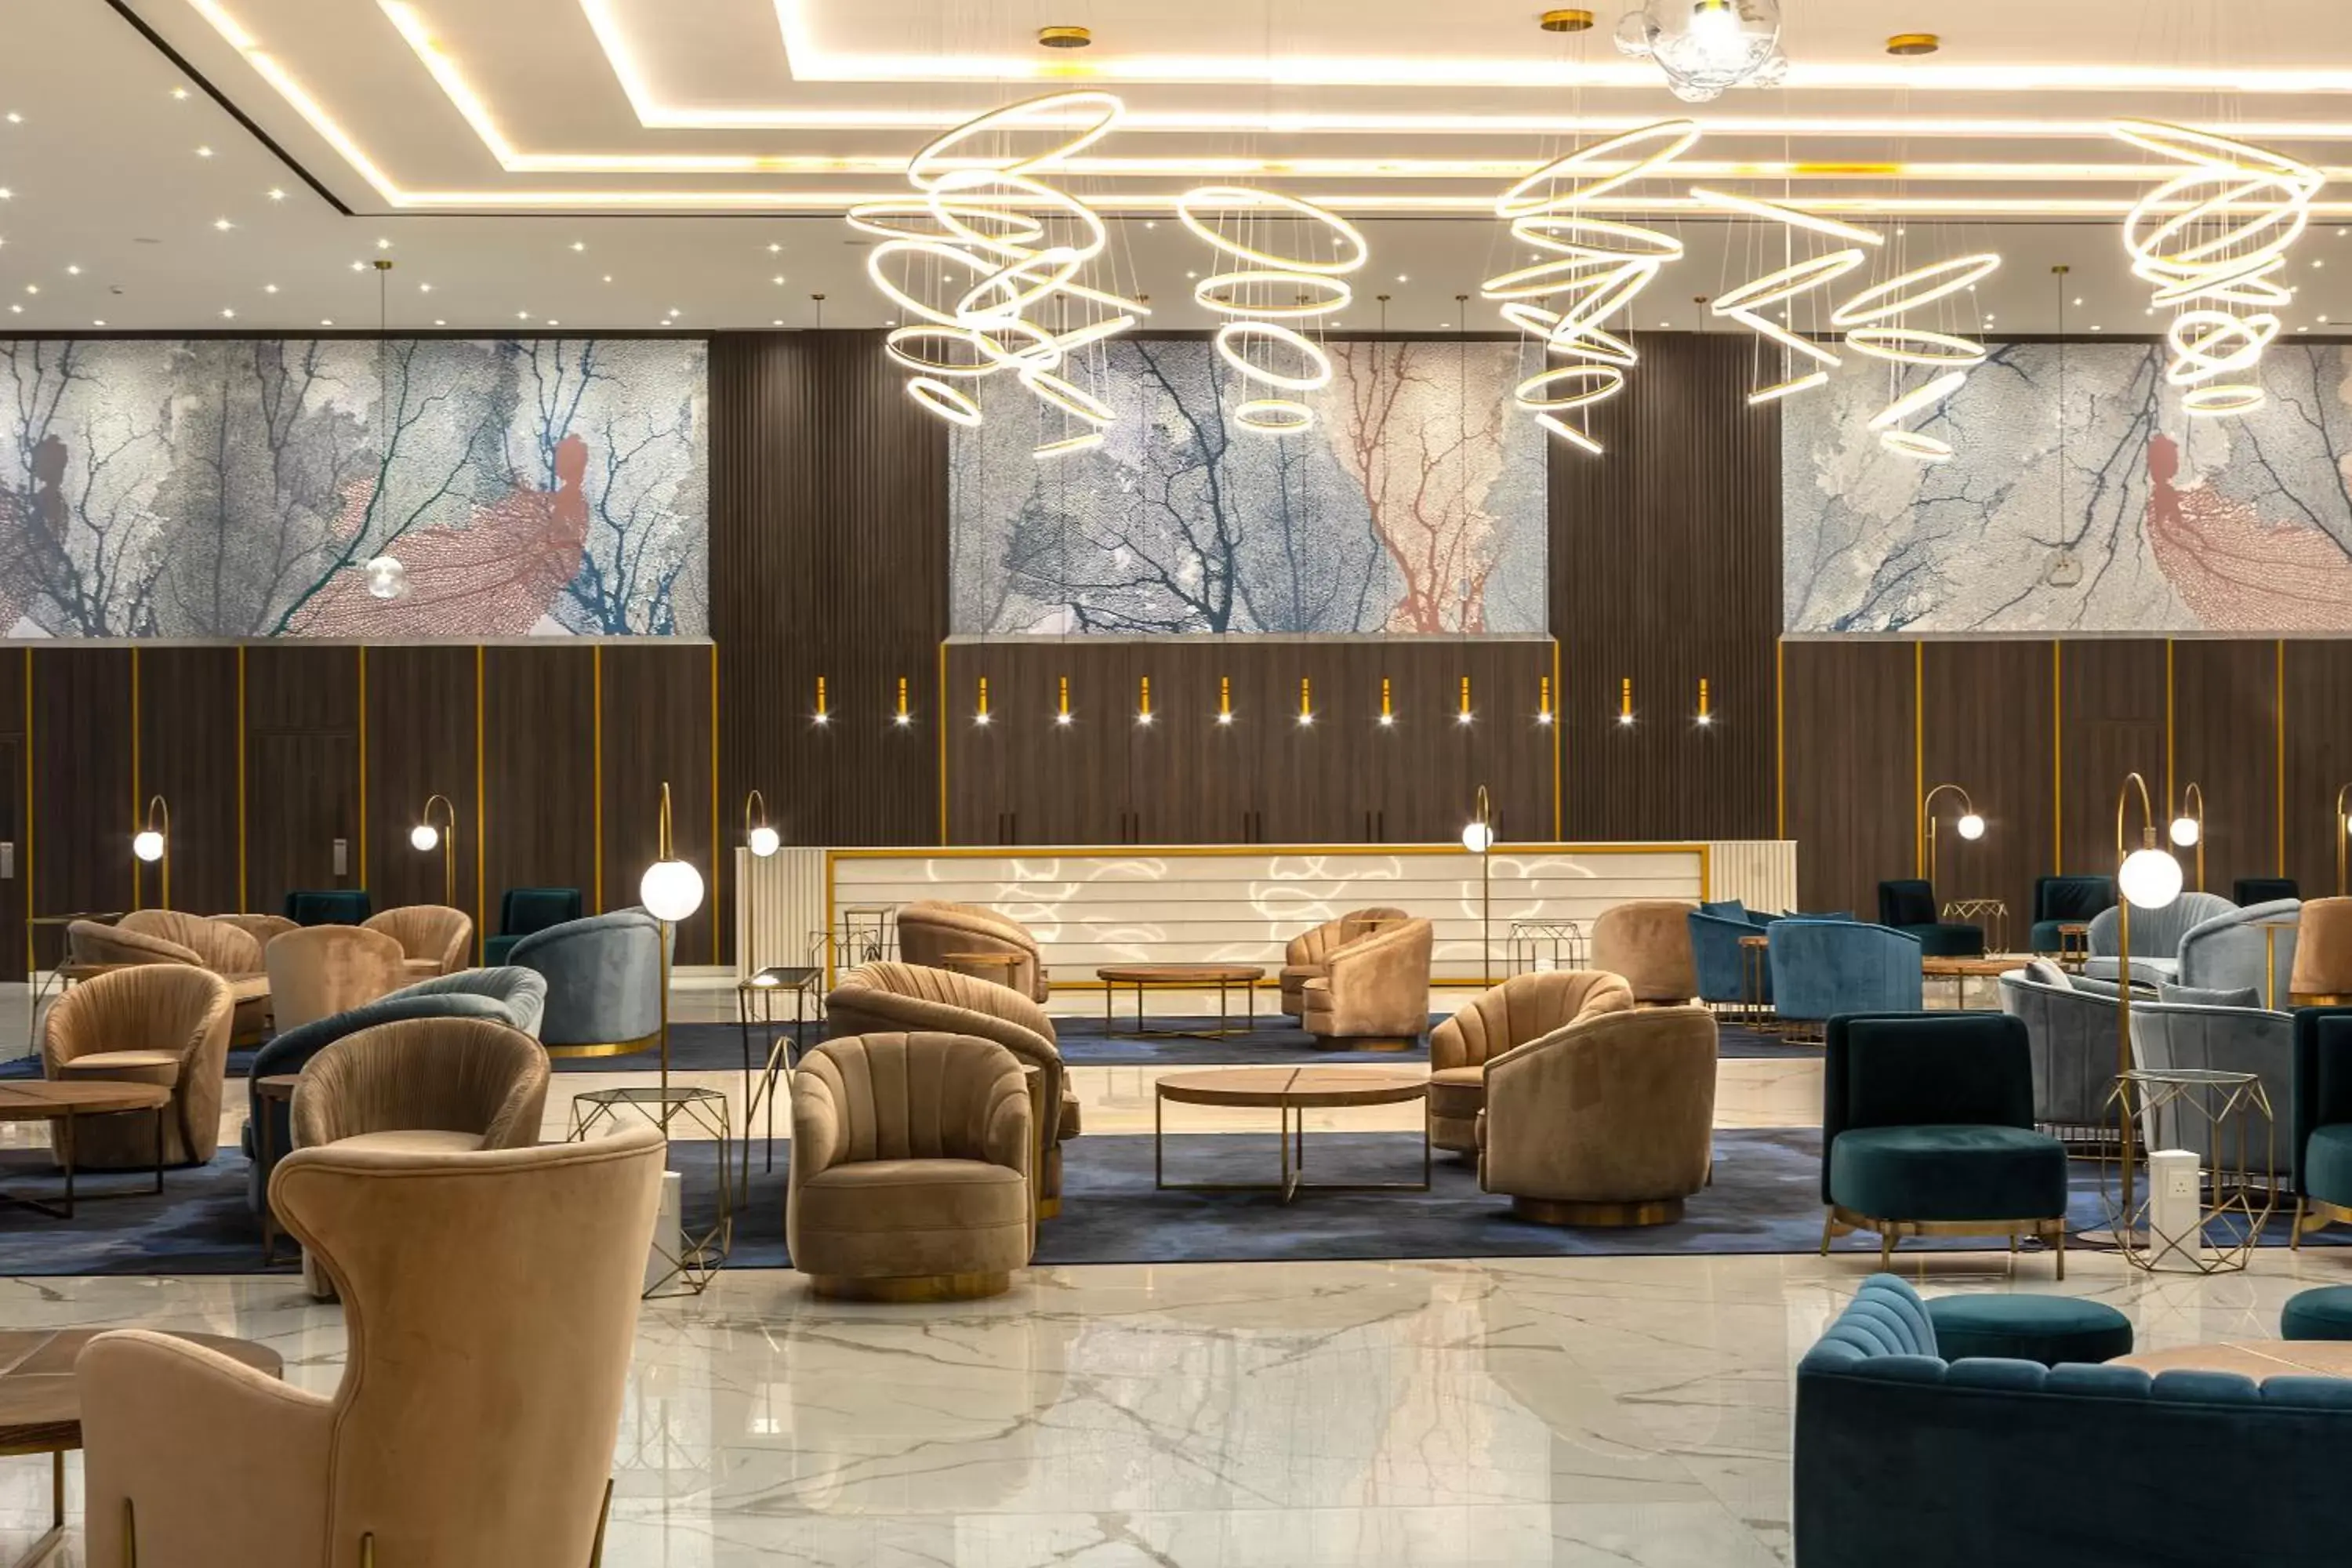 Lobby or reception in Chrysomare Beach Hotel & Resort